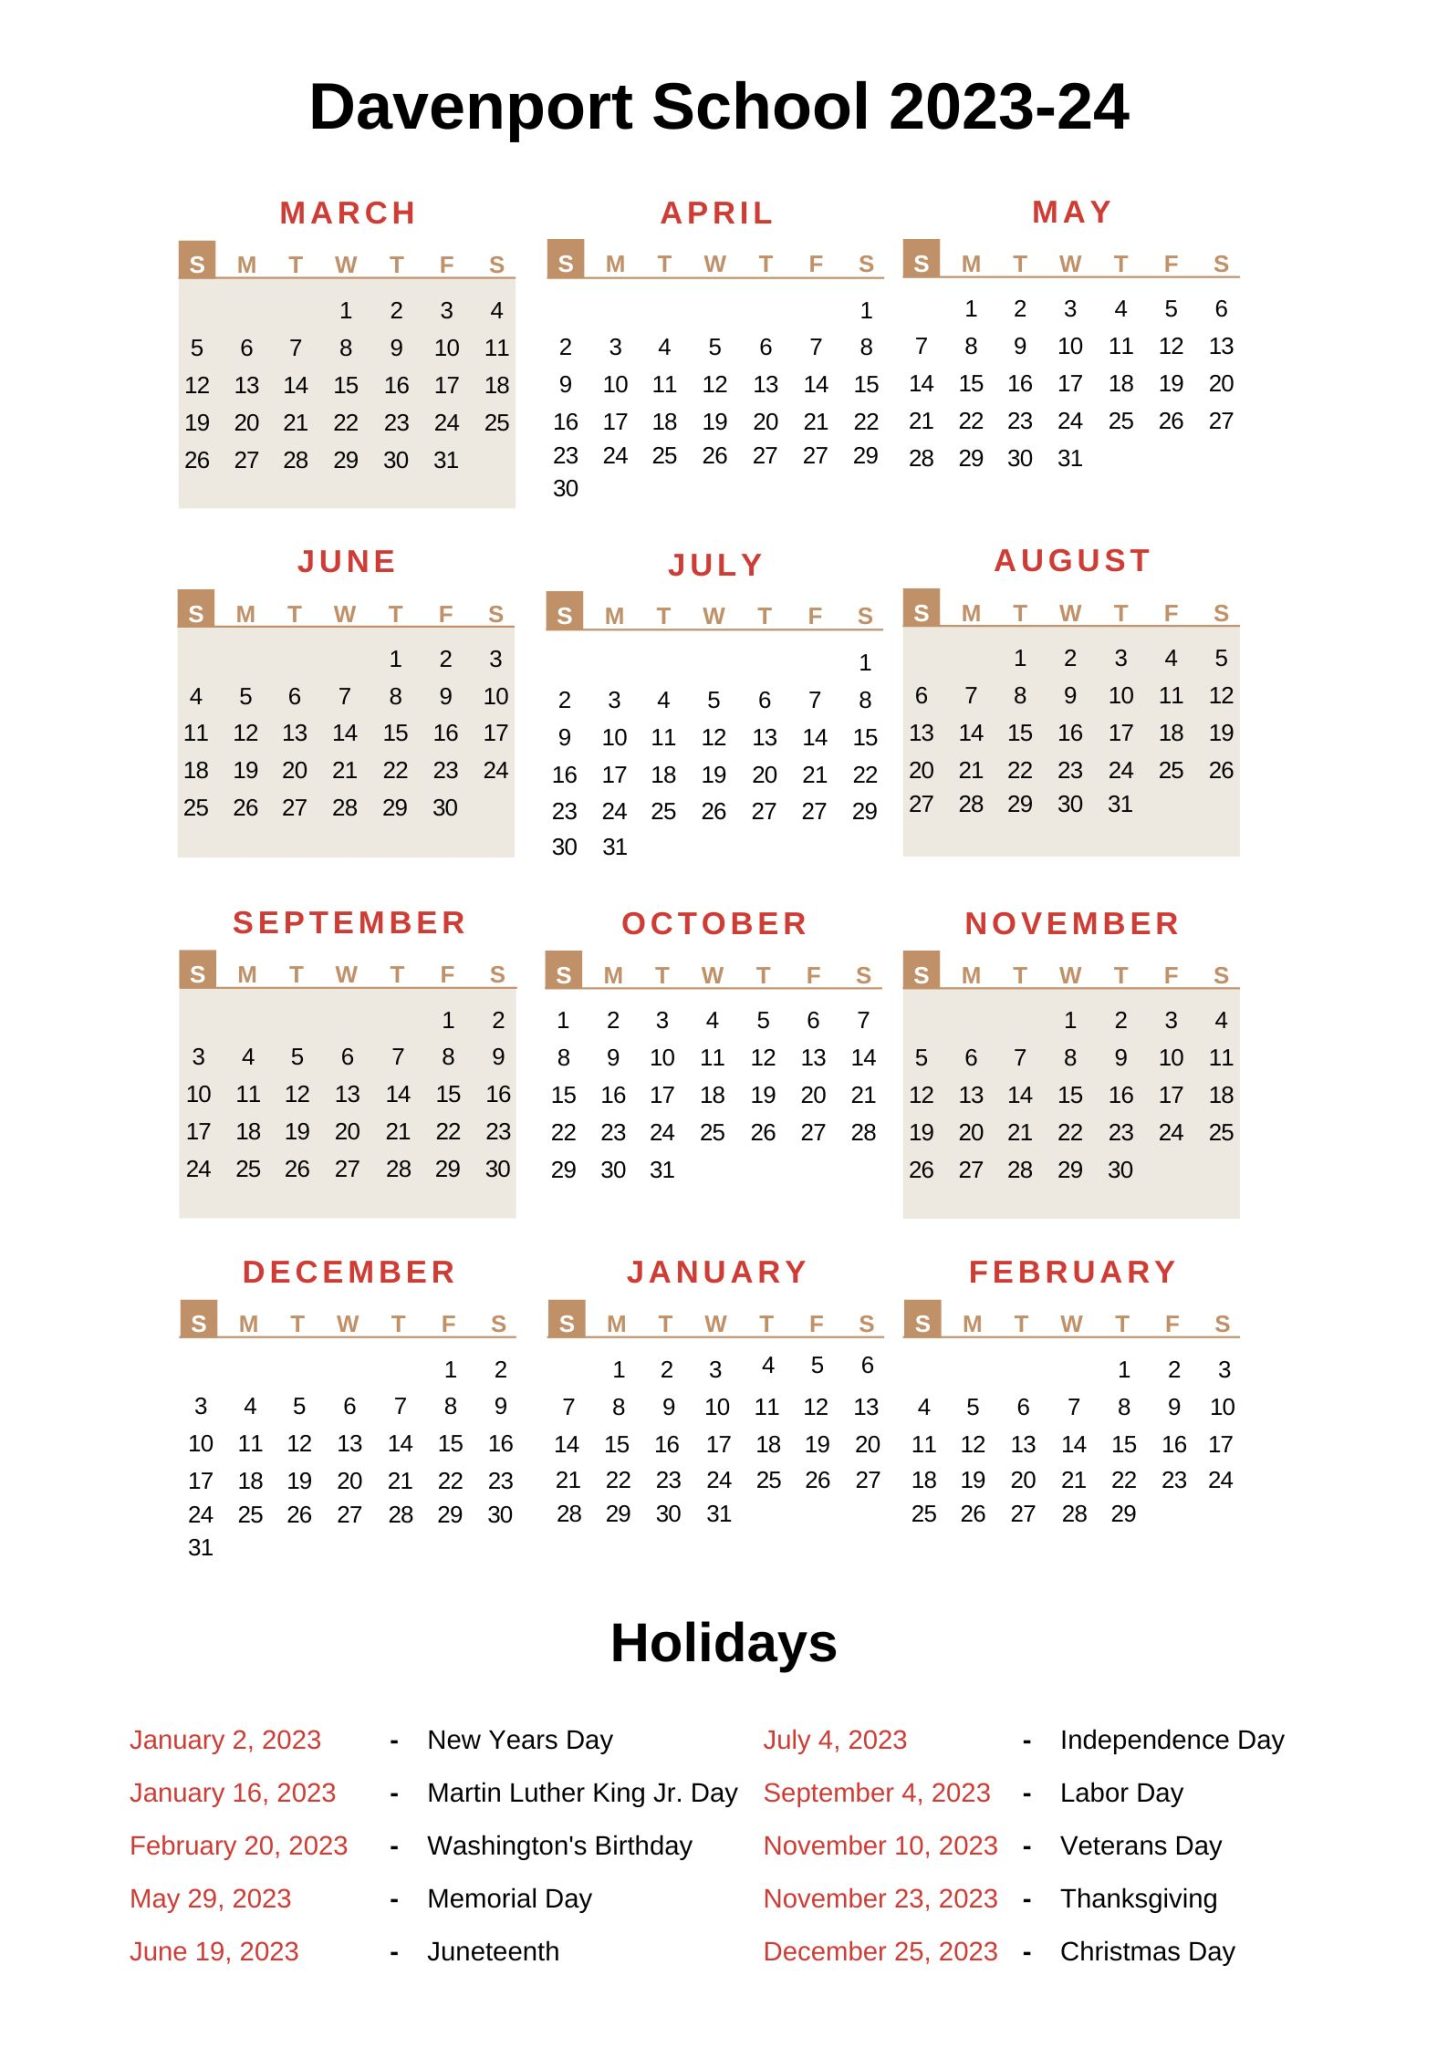 davenport-schools-calendar-2023-24-with-holidays